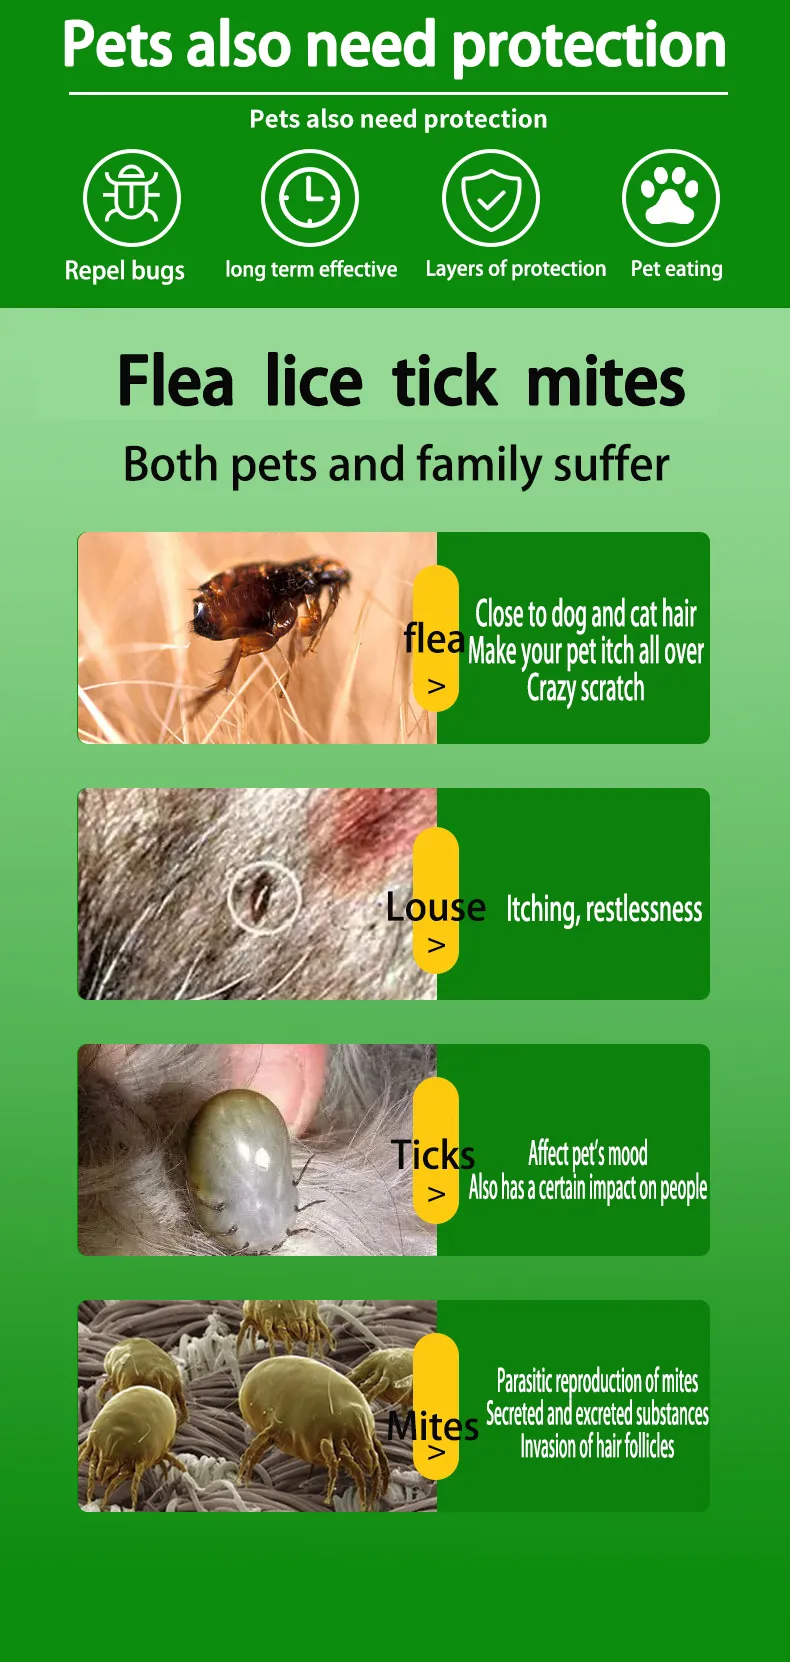 will lice shampoo kill mites on dogs